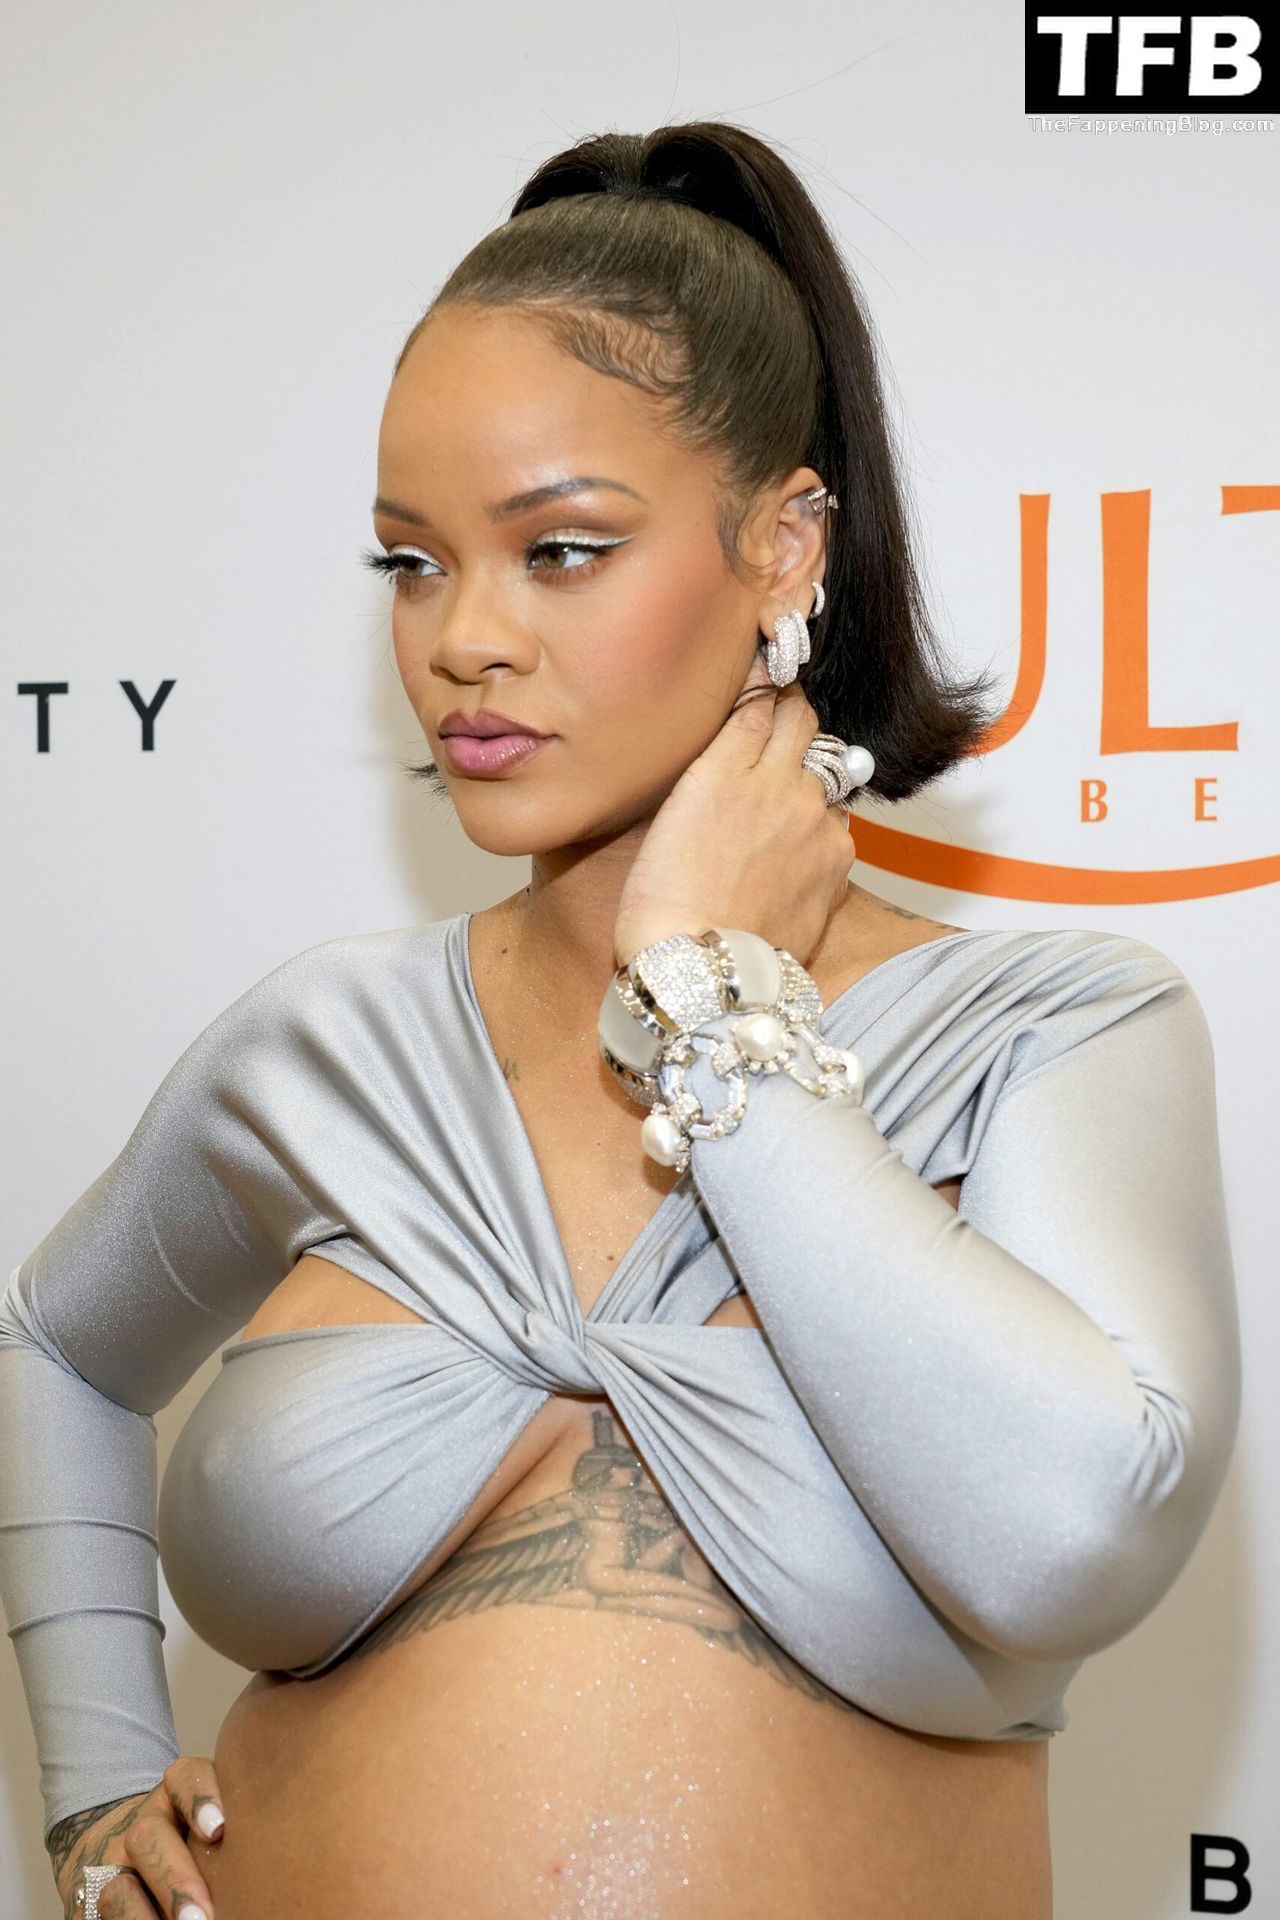 Rihanna-Sexy-The-Fappening-Blog-9-4.jpg